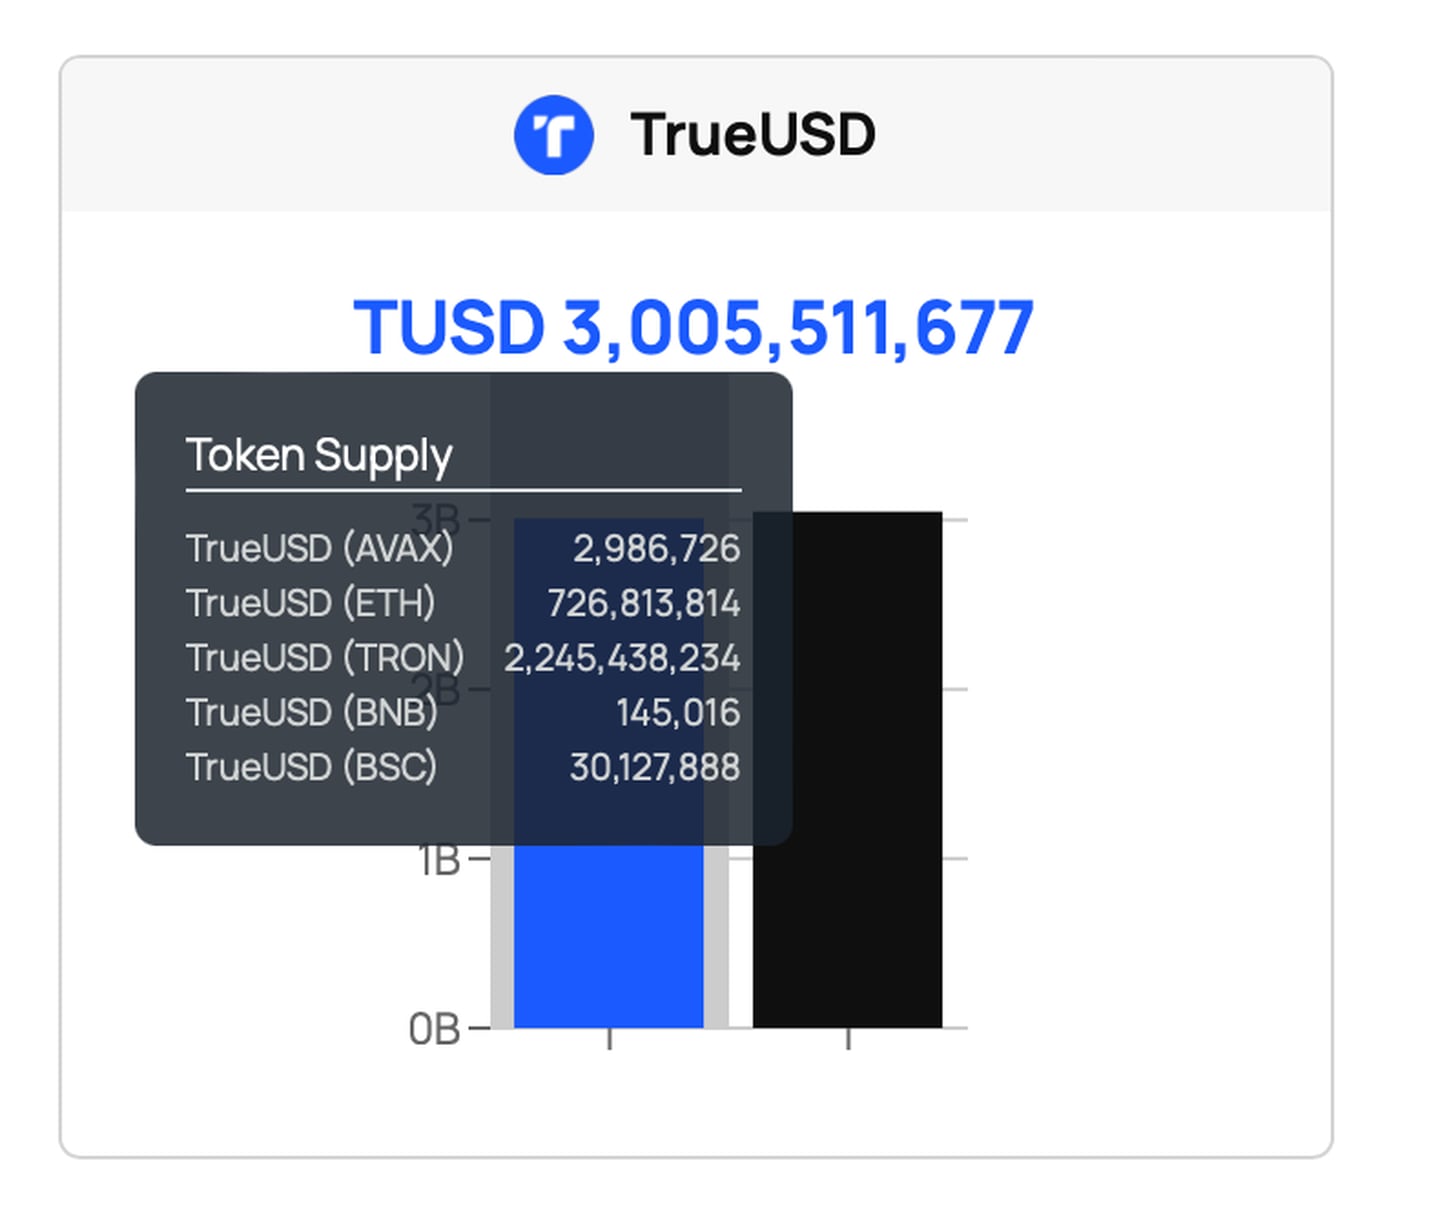 TUSD supply broken down by blockchain